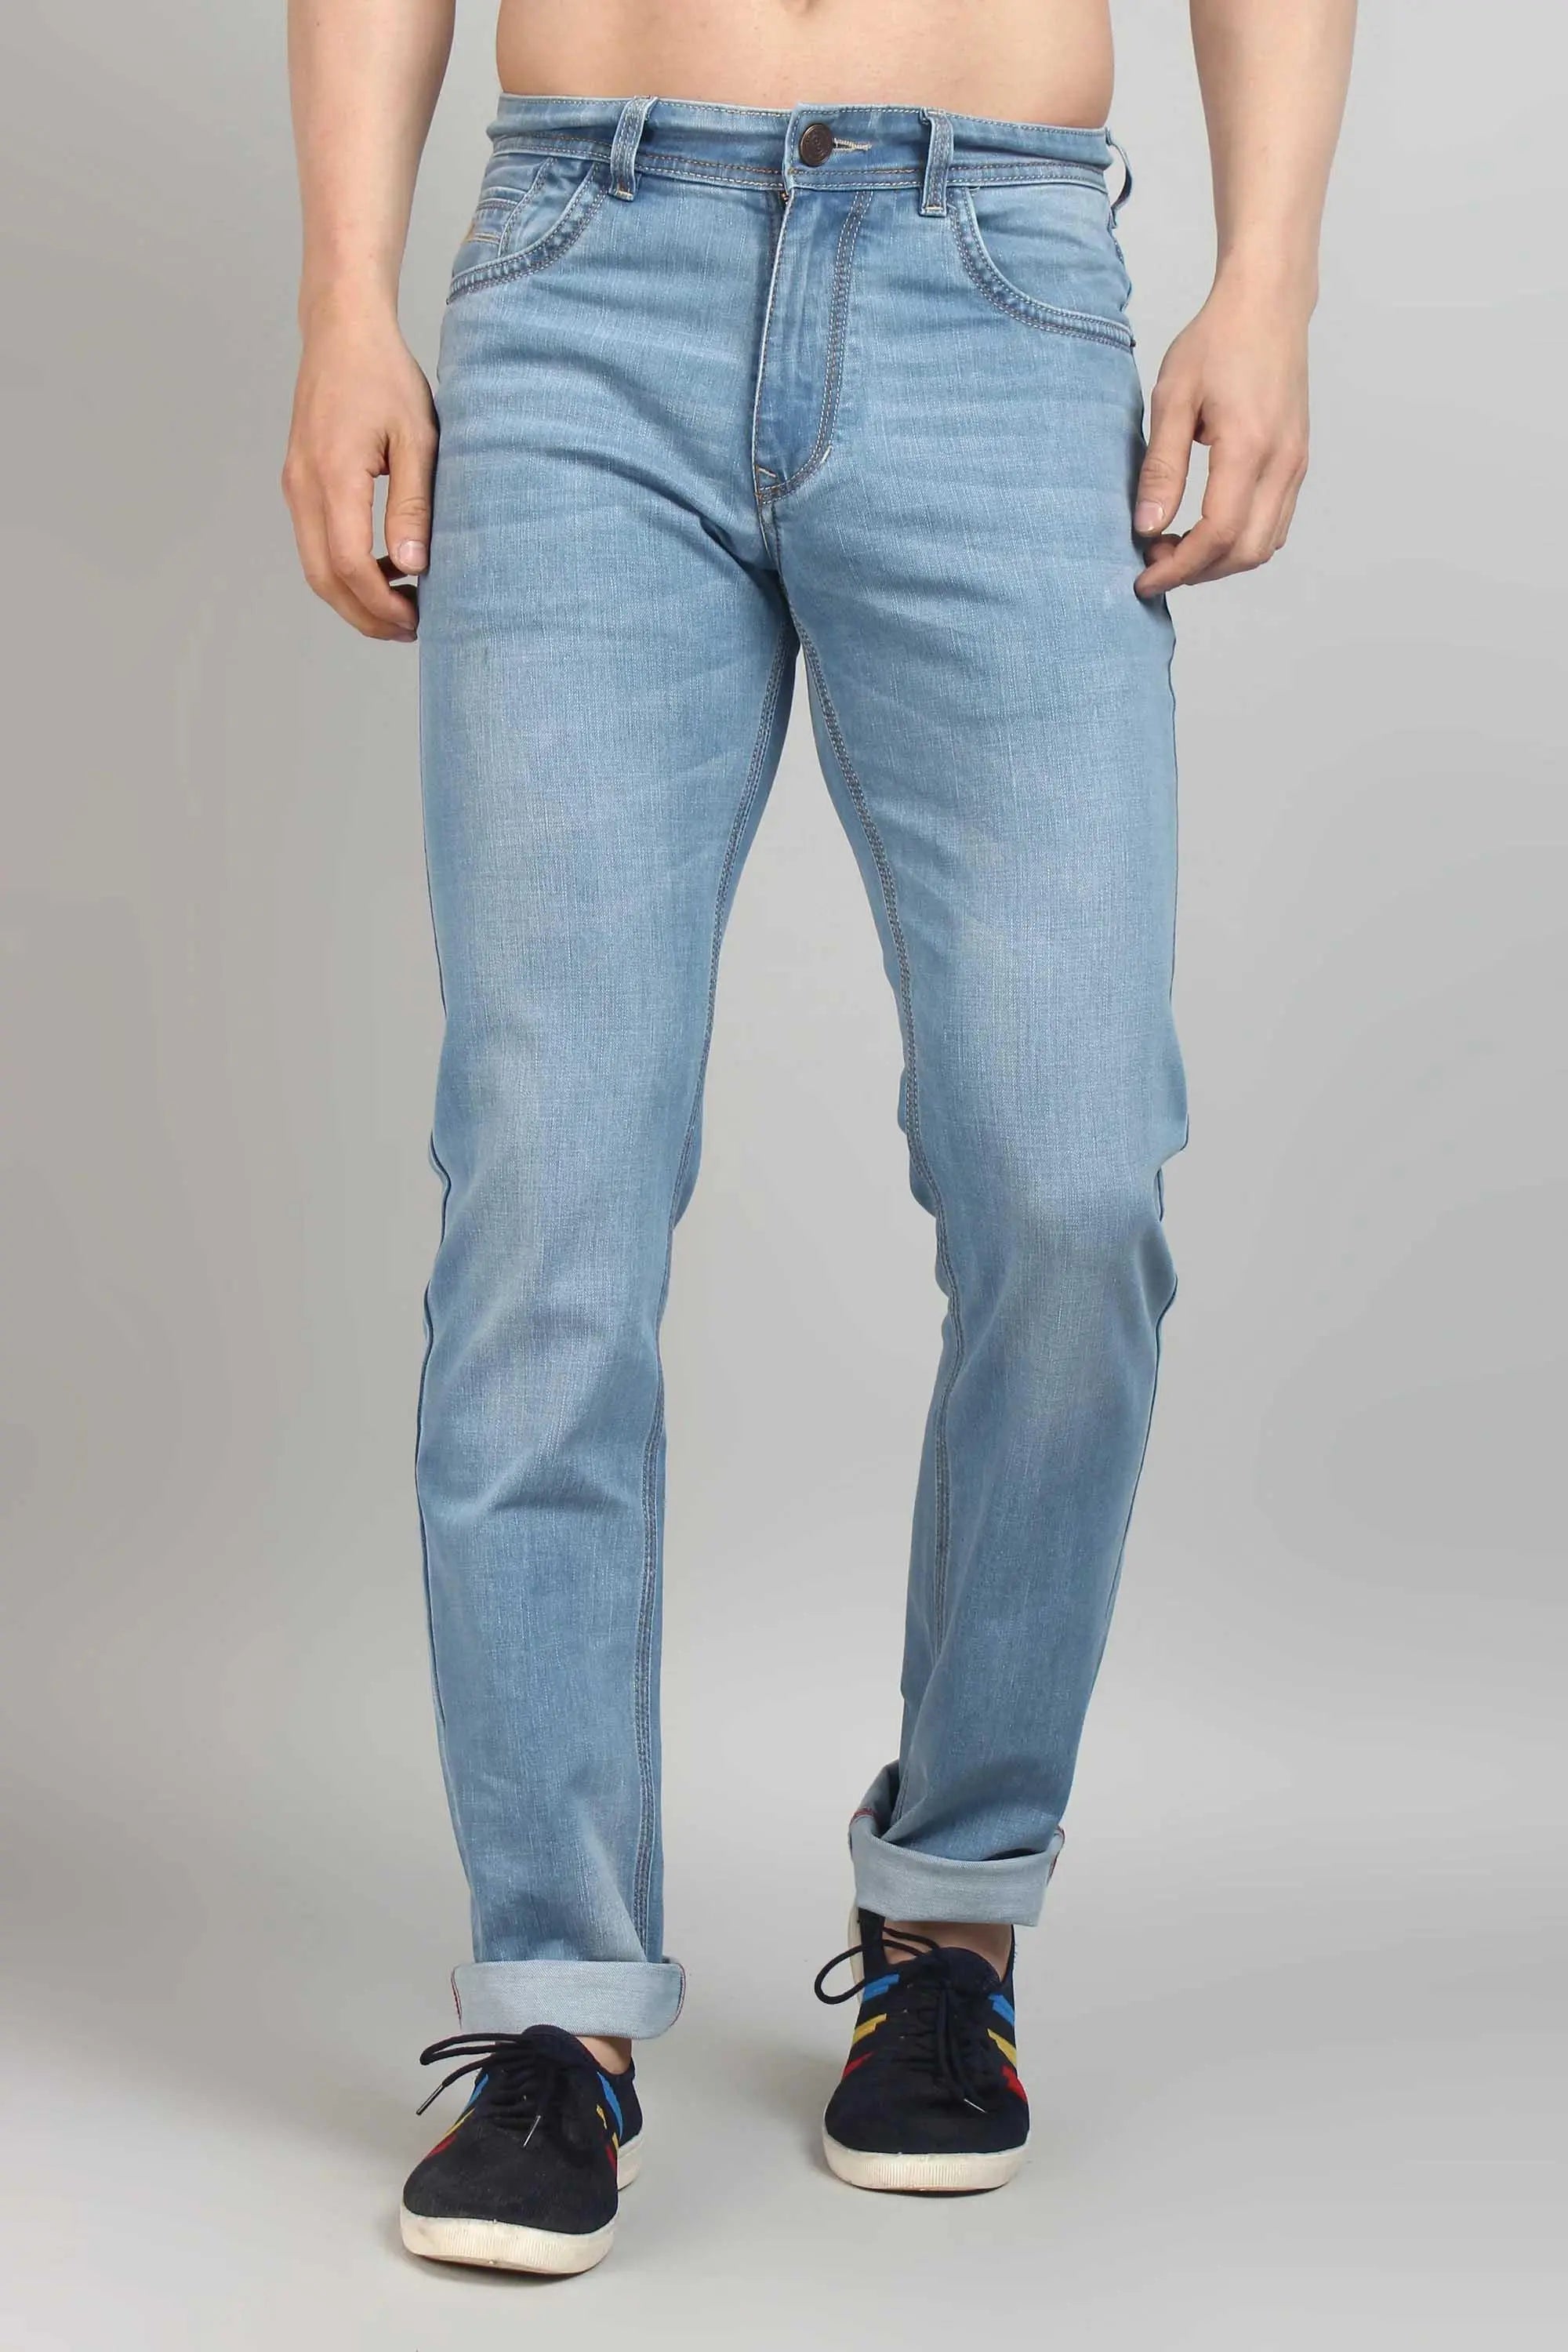 Relaxed Fit Light Blue Premium Denim Jeans For men - Peplos Jeans ...